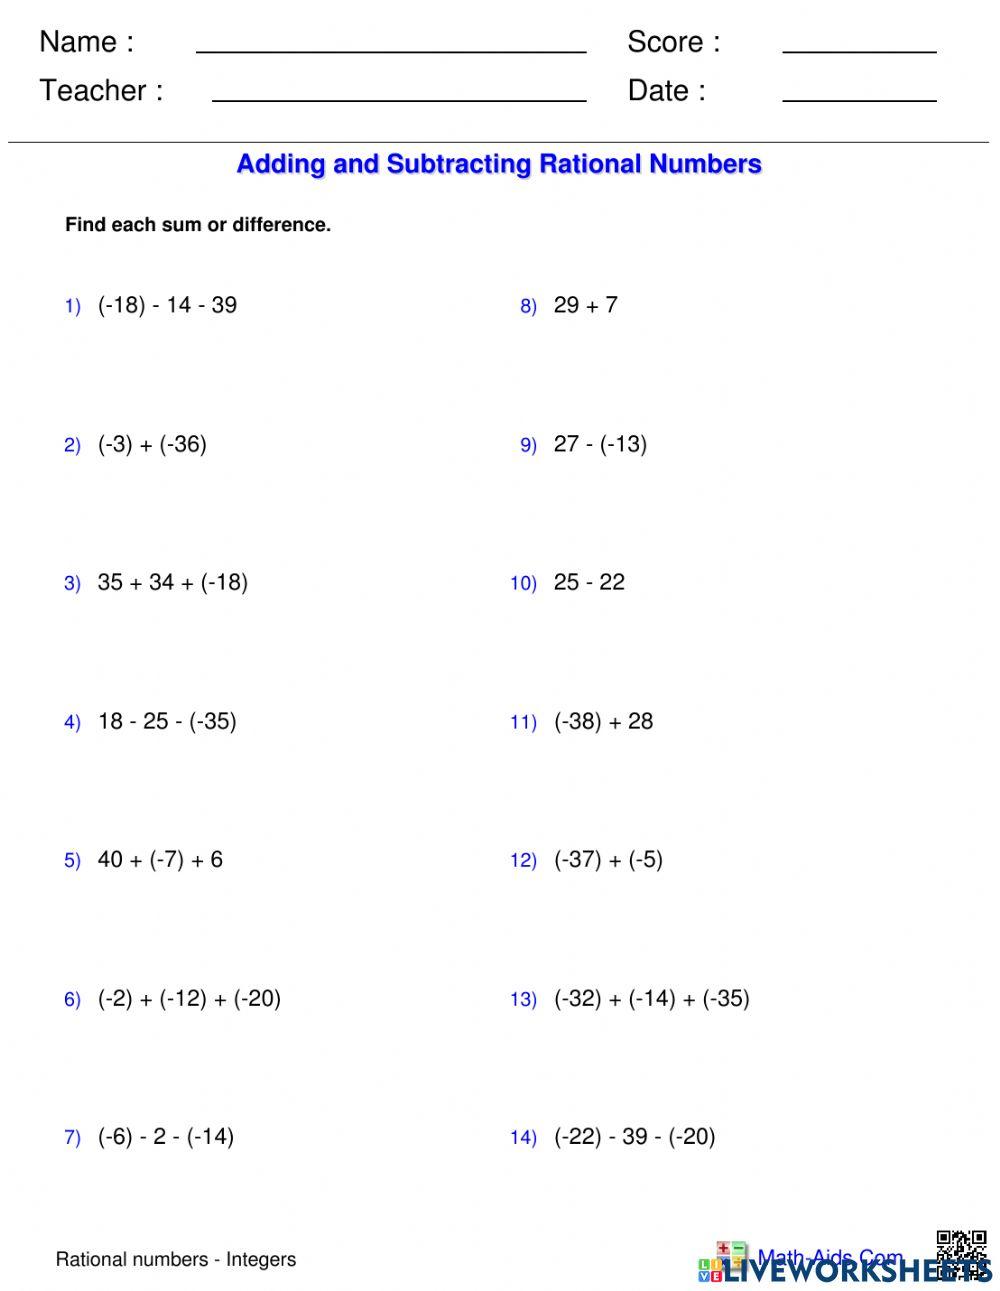 Rational-Integers: Add-Sub Rational numbers